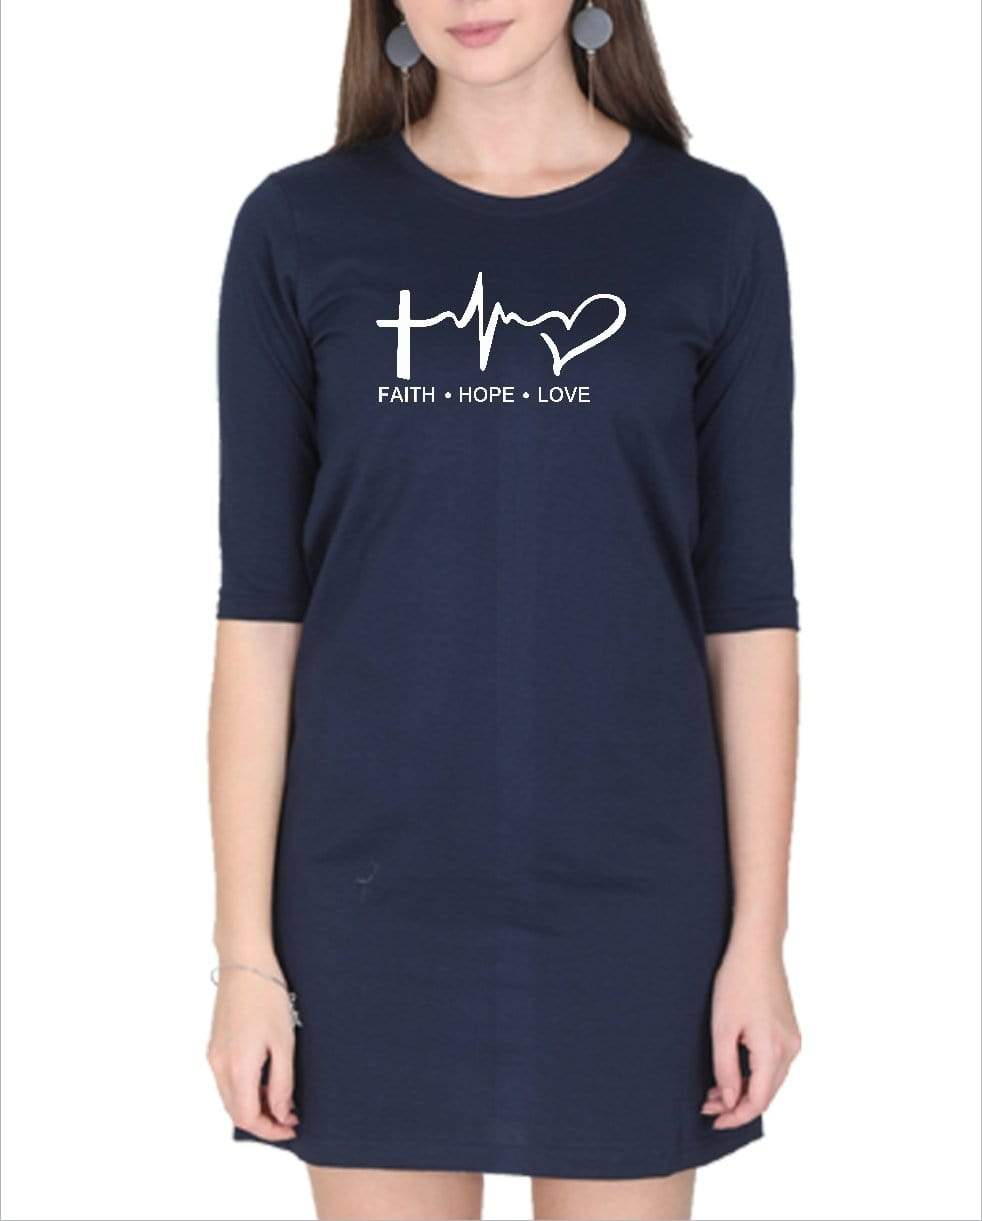 Living Words Women Round Neck T Shirt S / Navy Blue Faith Hope Love